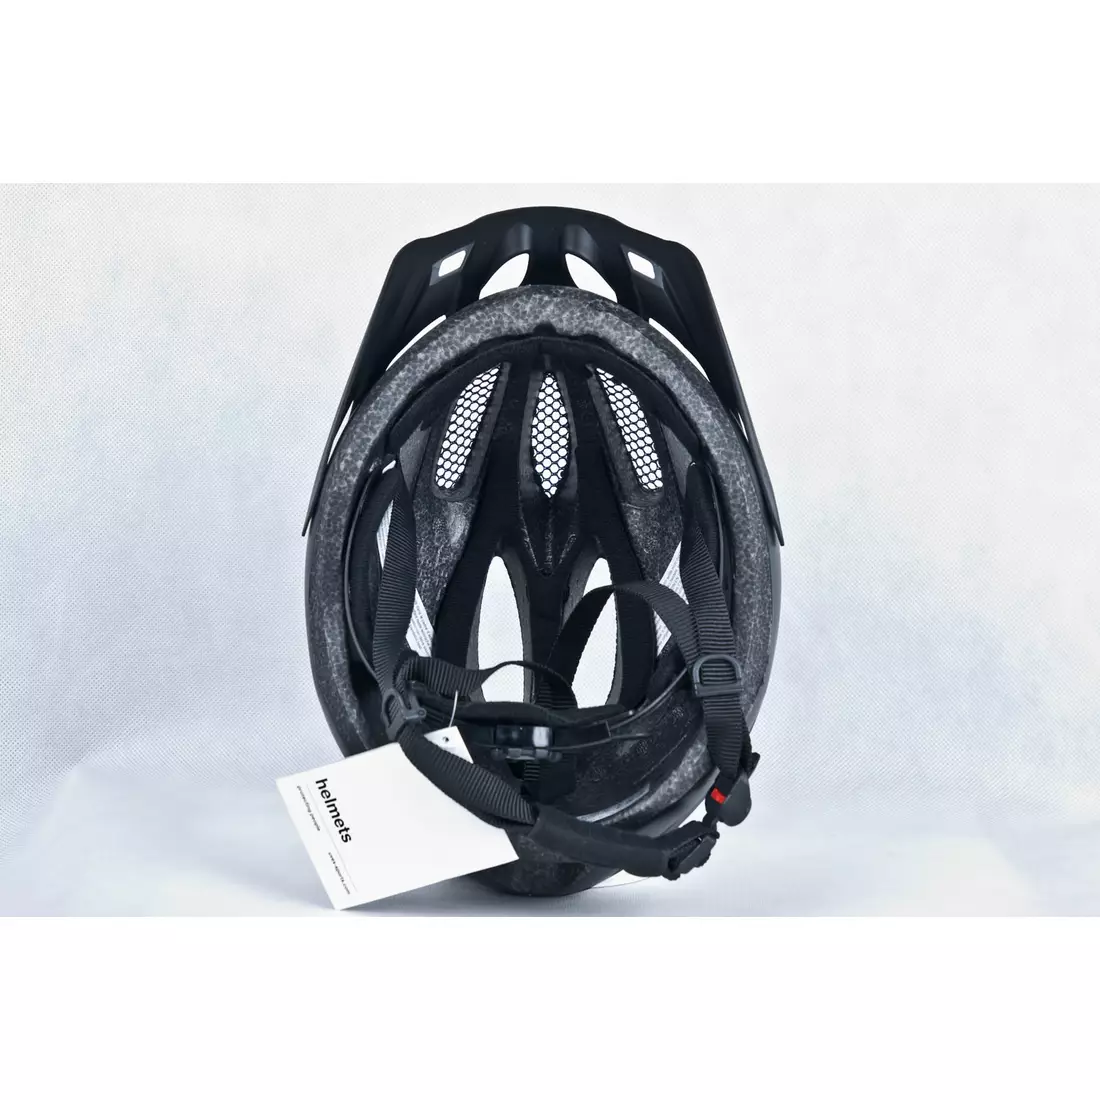 UVEX VIVA 2 cyklistická helma 410104mat03 white mat